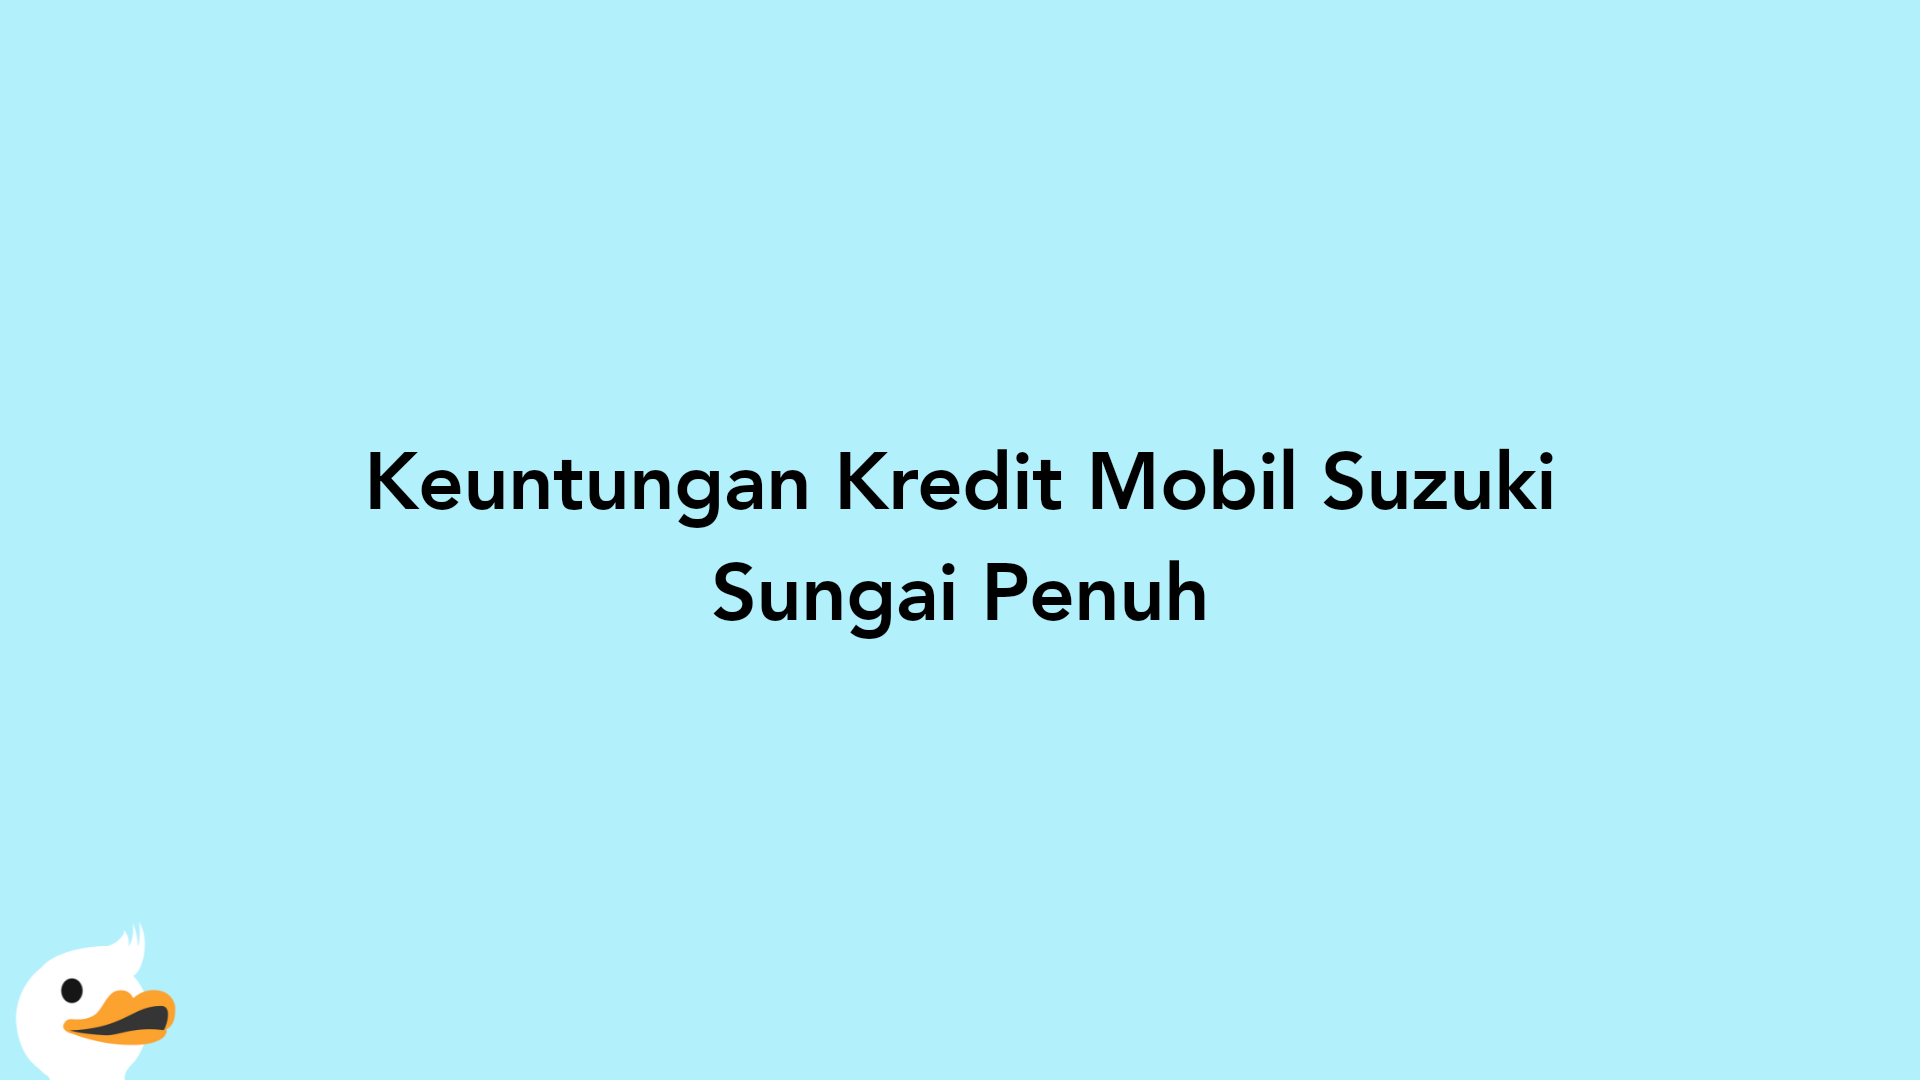 Keuntungan Kredit Mobil Suzuki Sungai Penuh